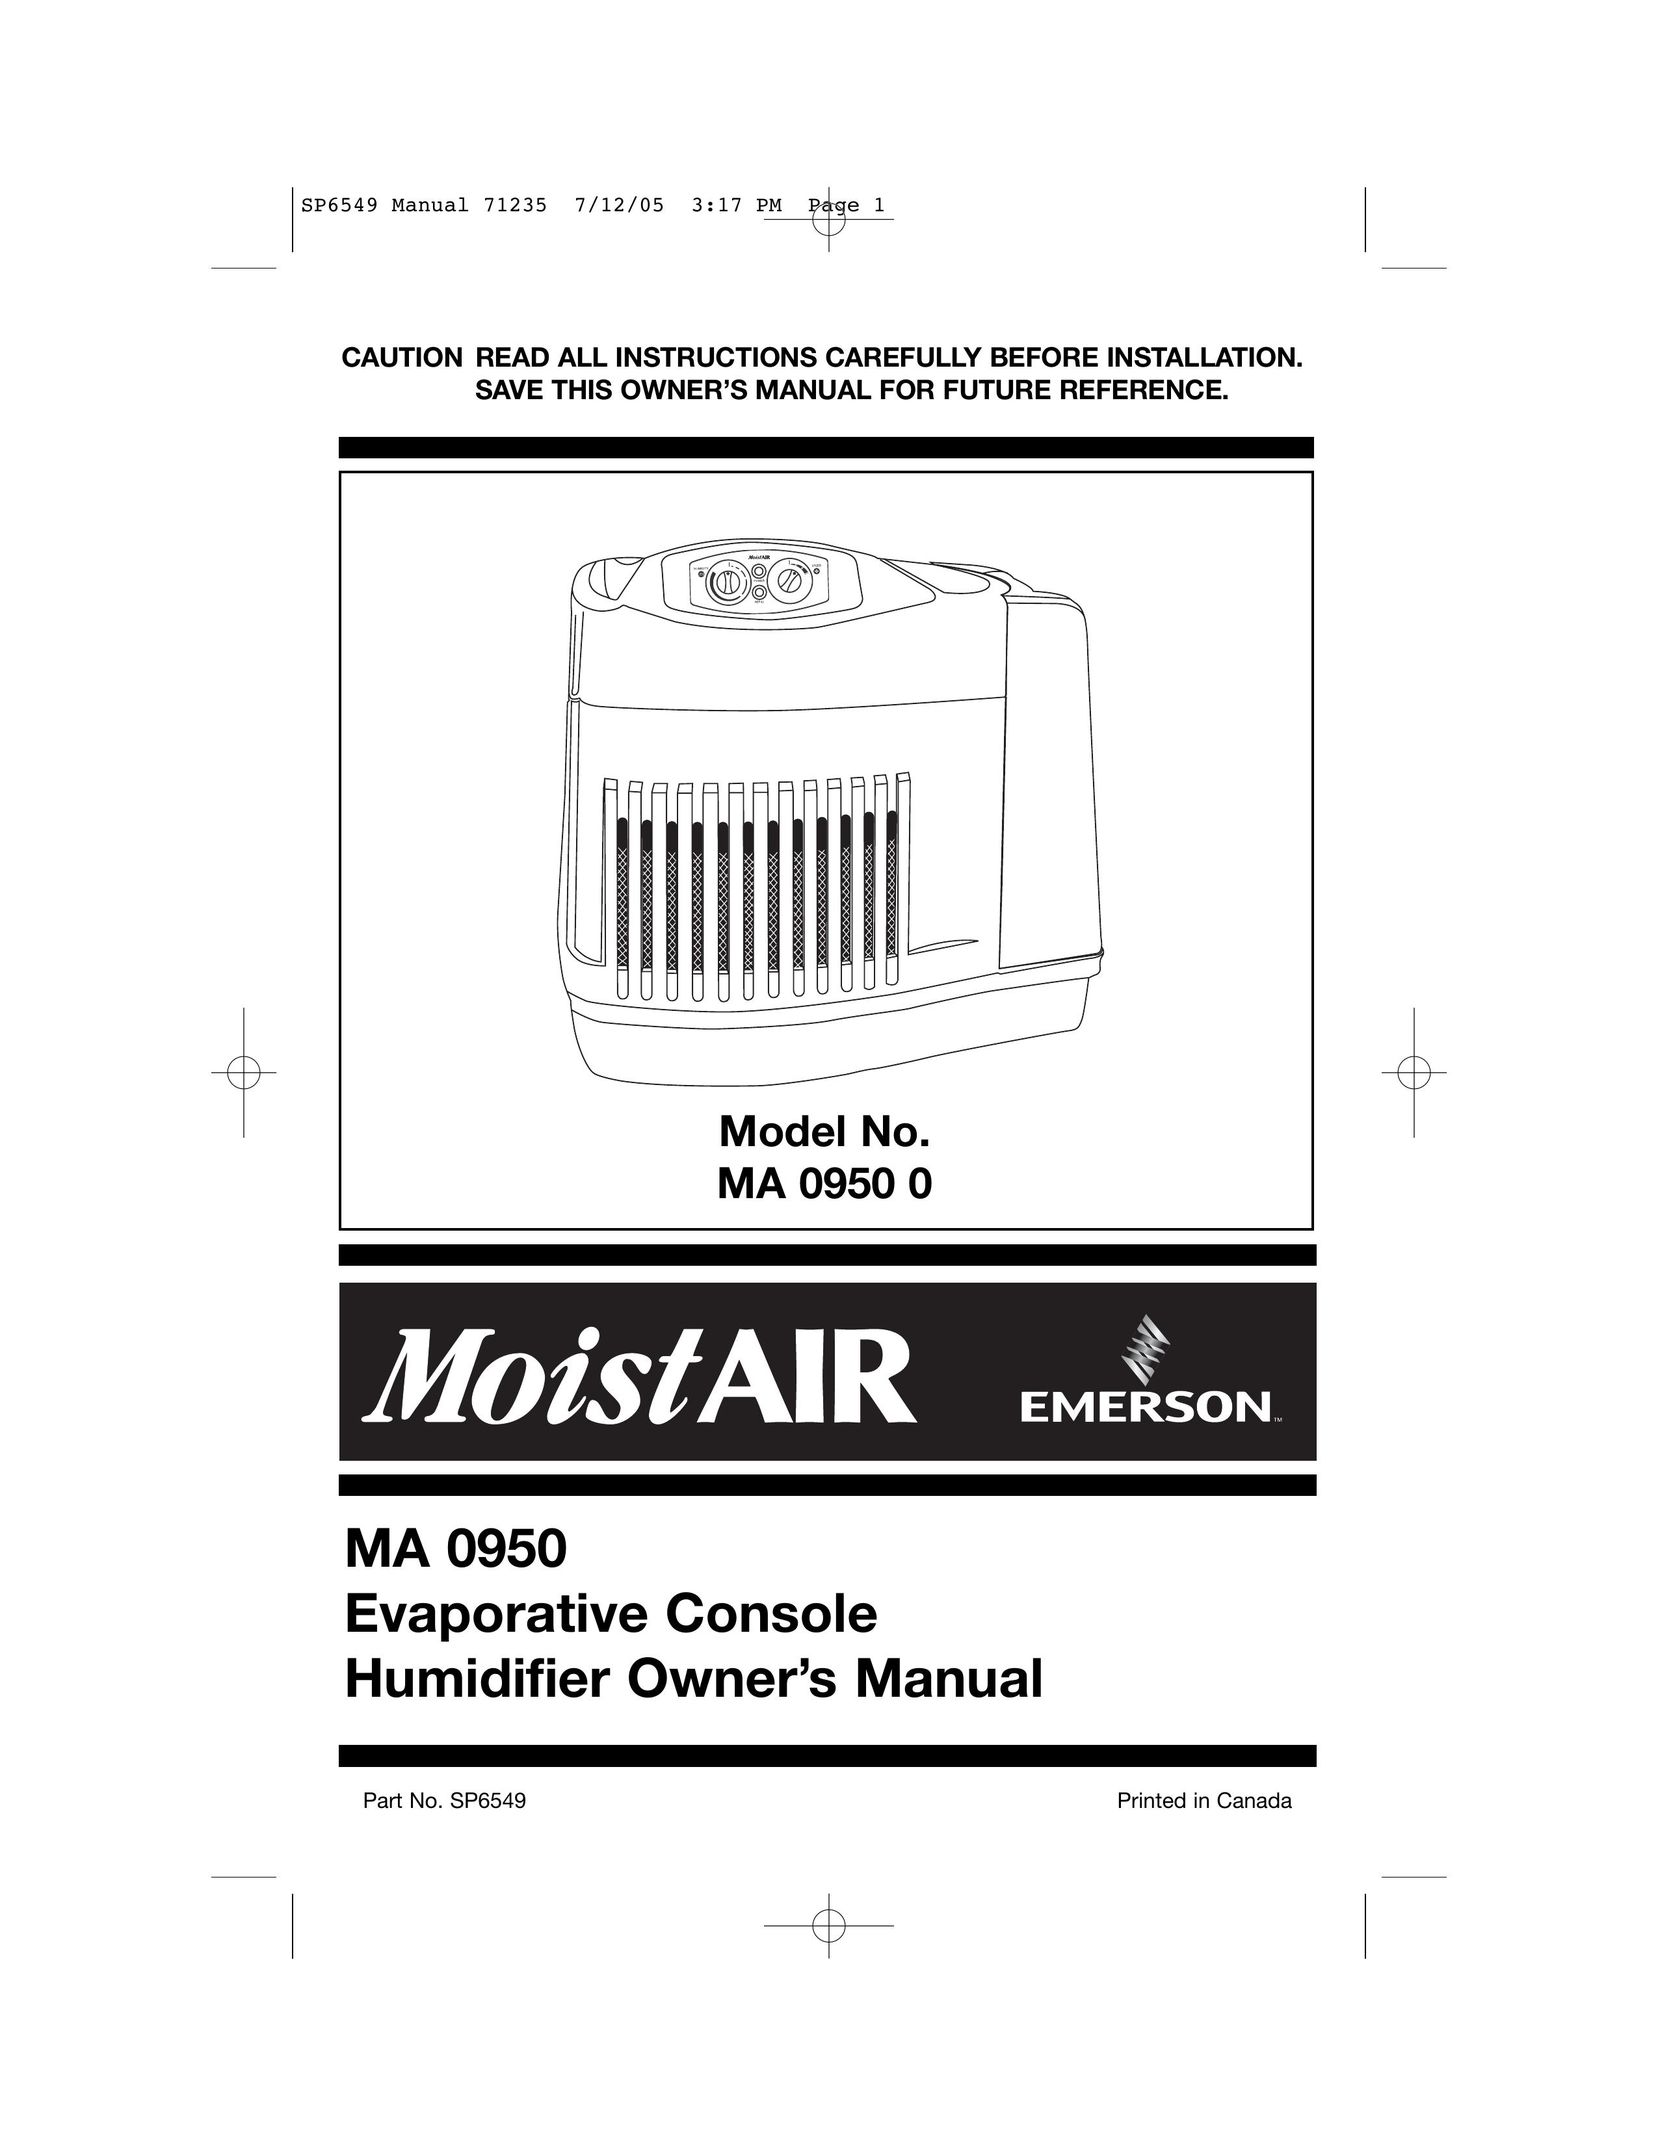 MoistAir MA 0950 Humidifier User Manual